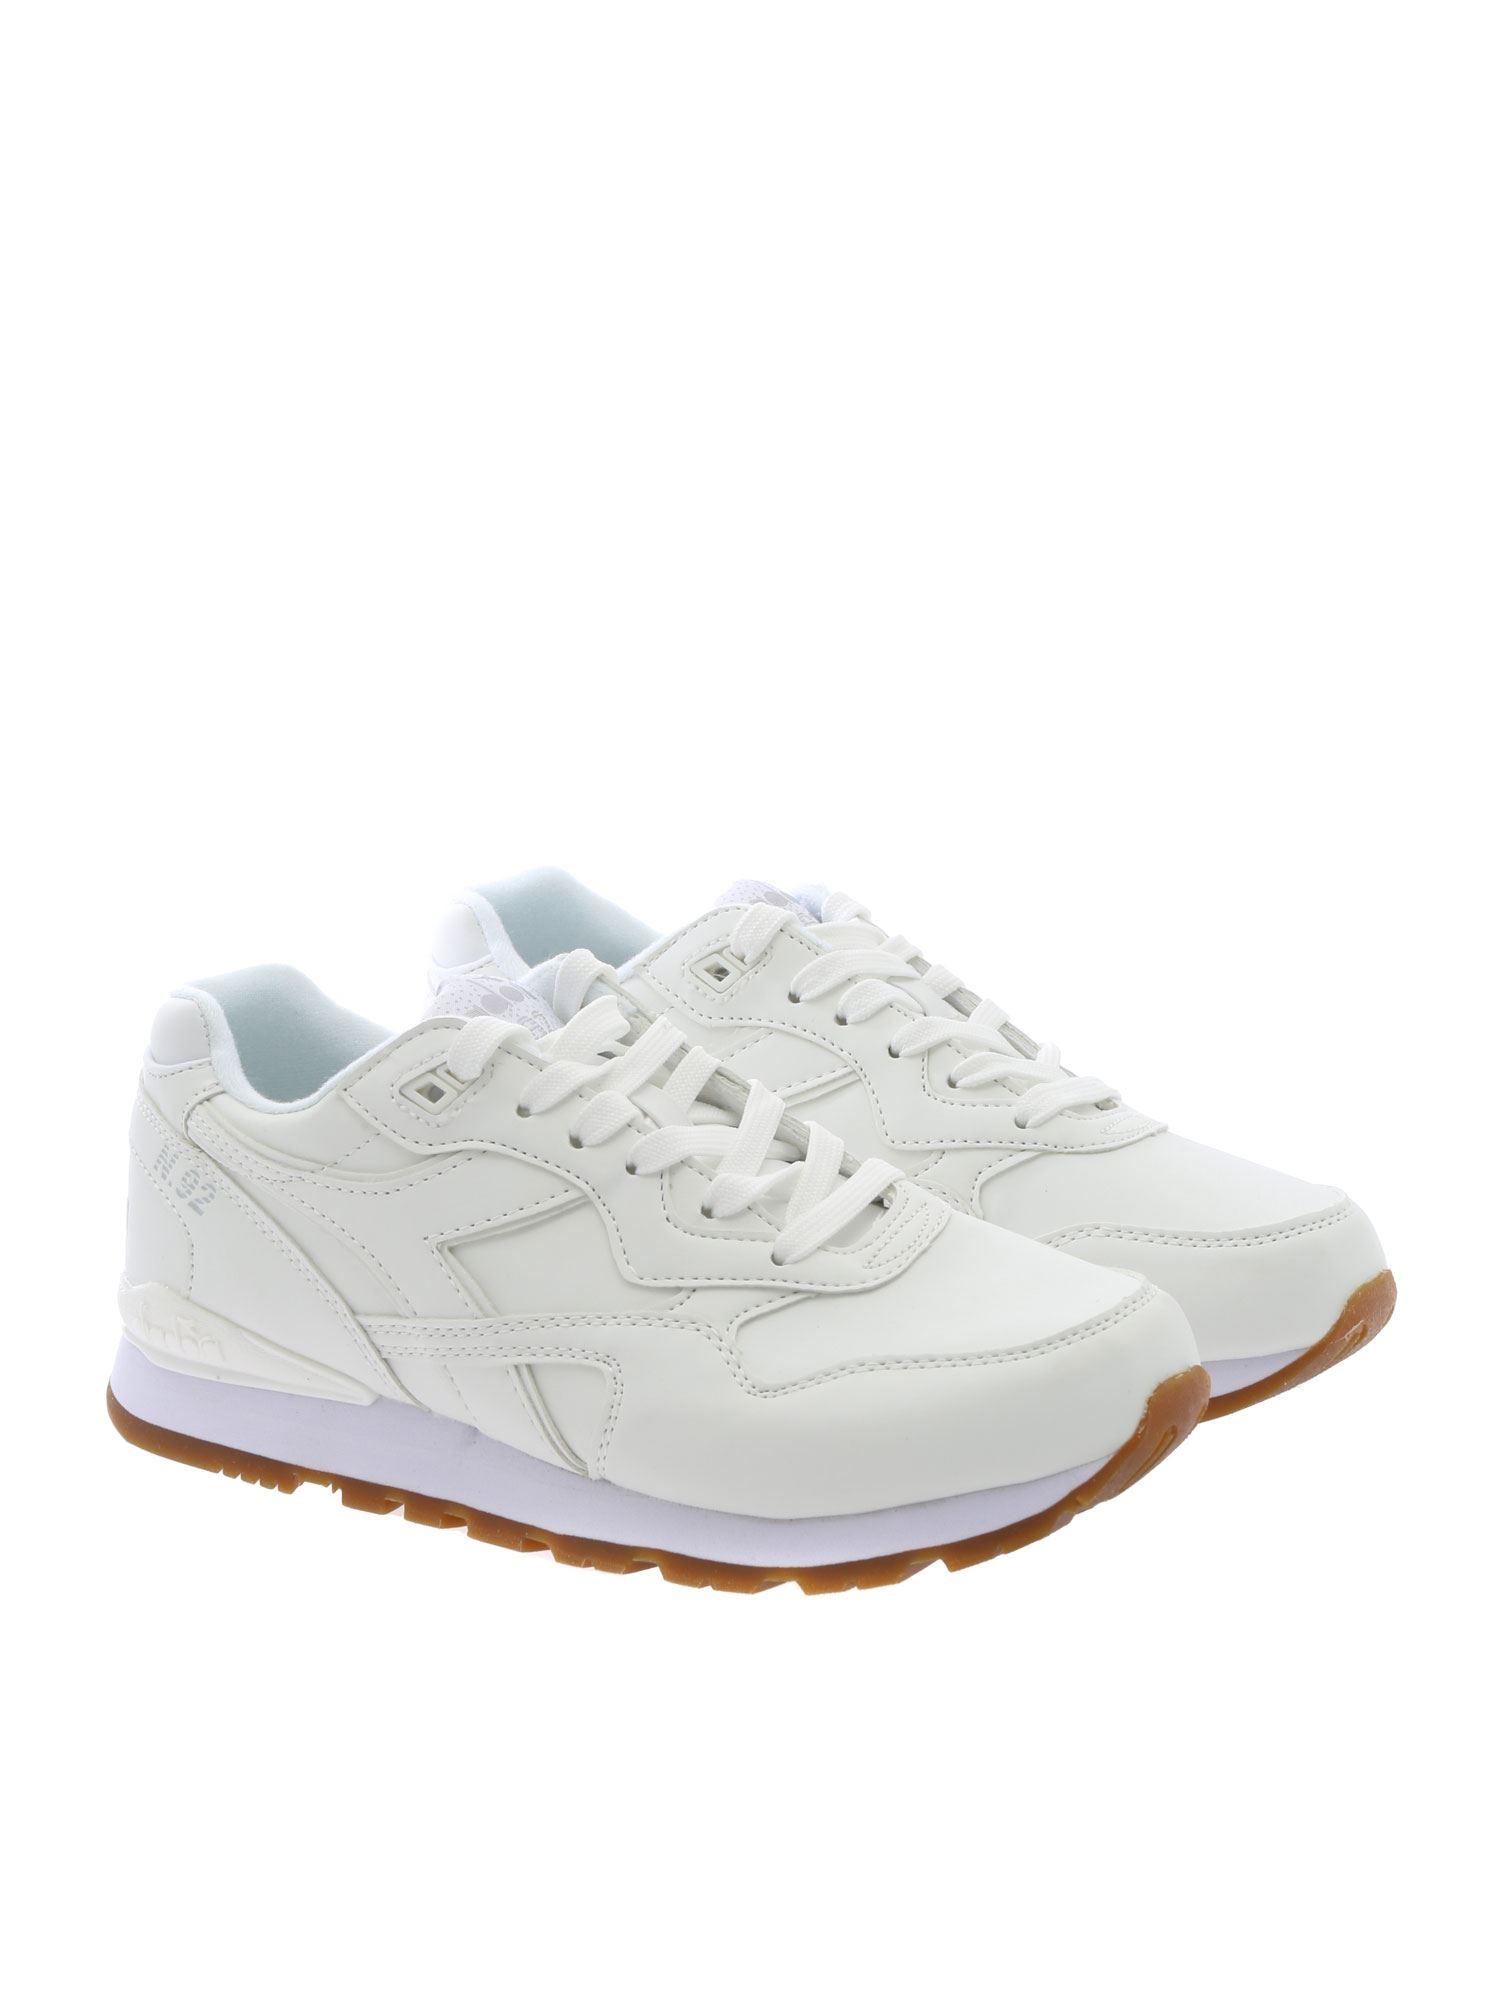 Diadora Leather N.92 L White Sneakers 